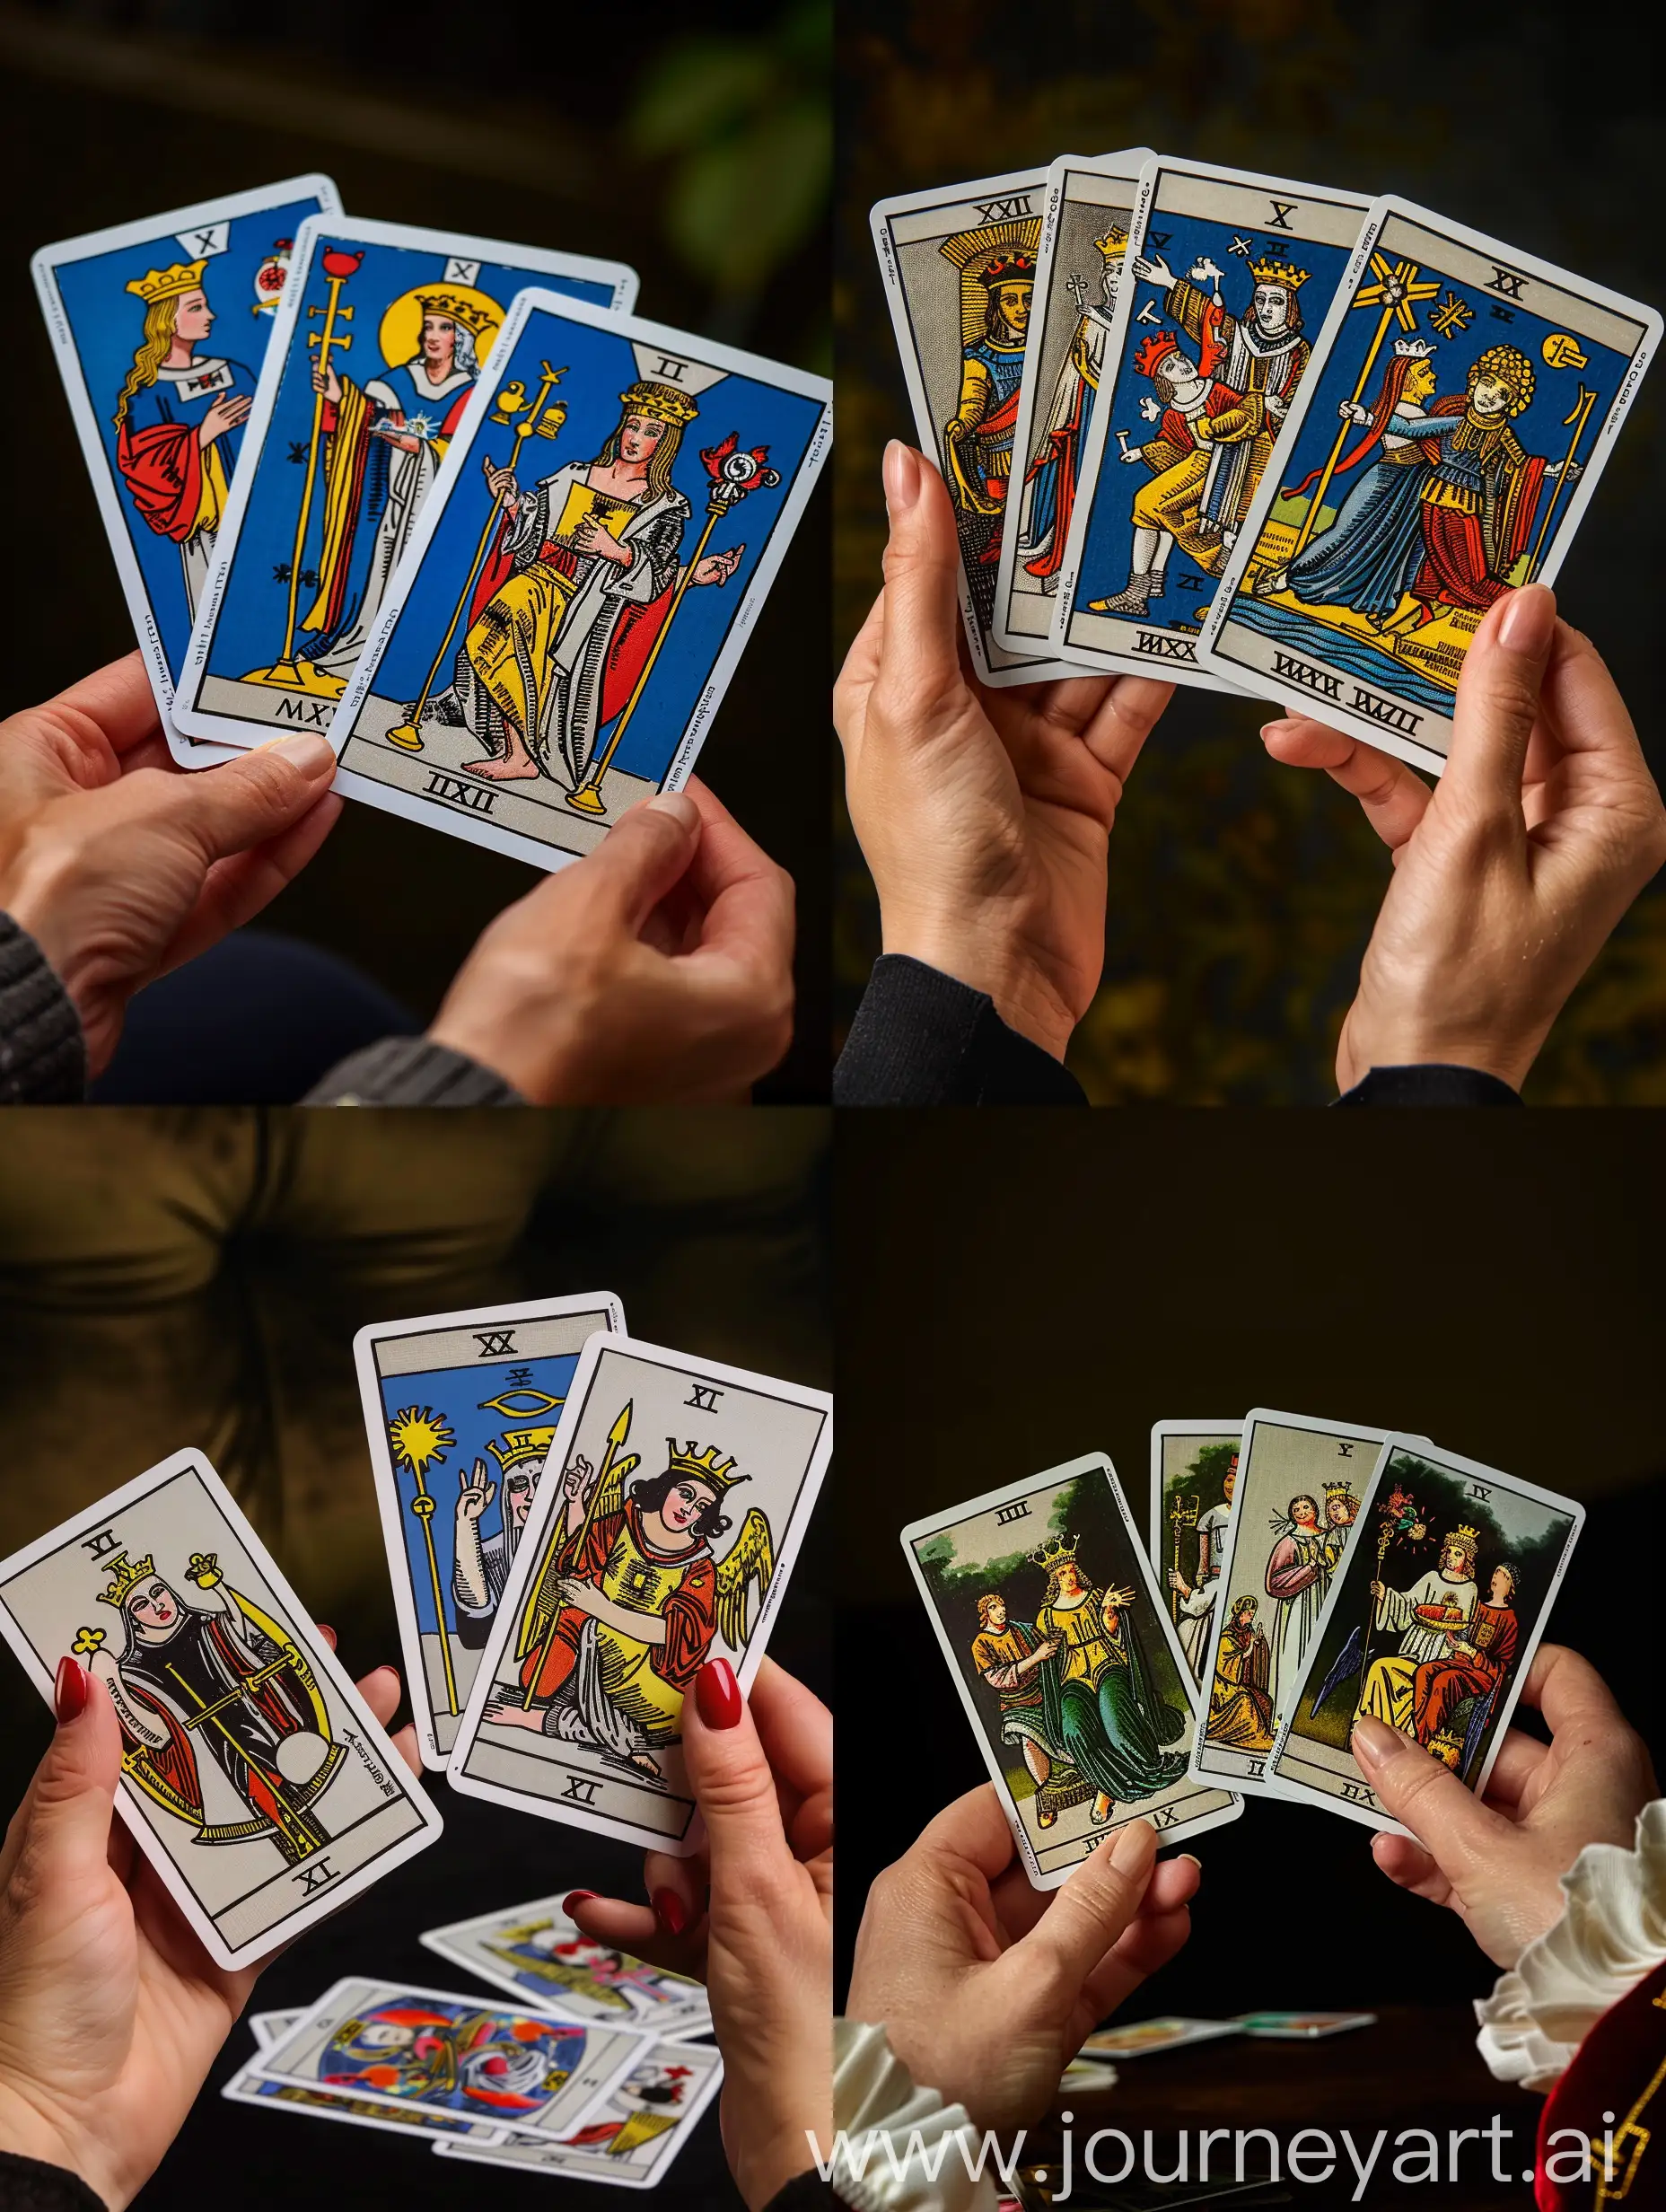 Hands-Holding-Tarot-Cards-on-Dark-Background